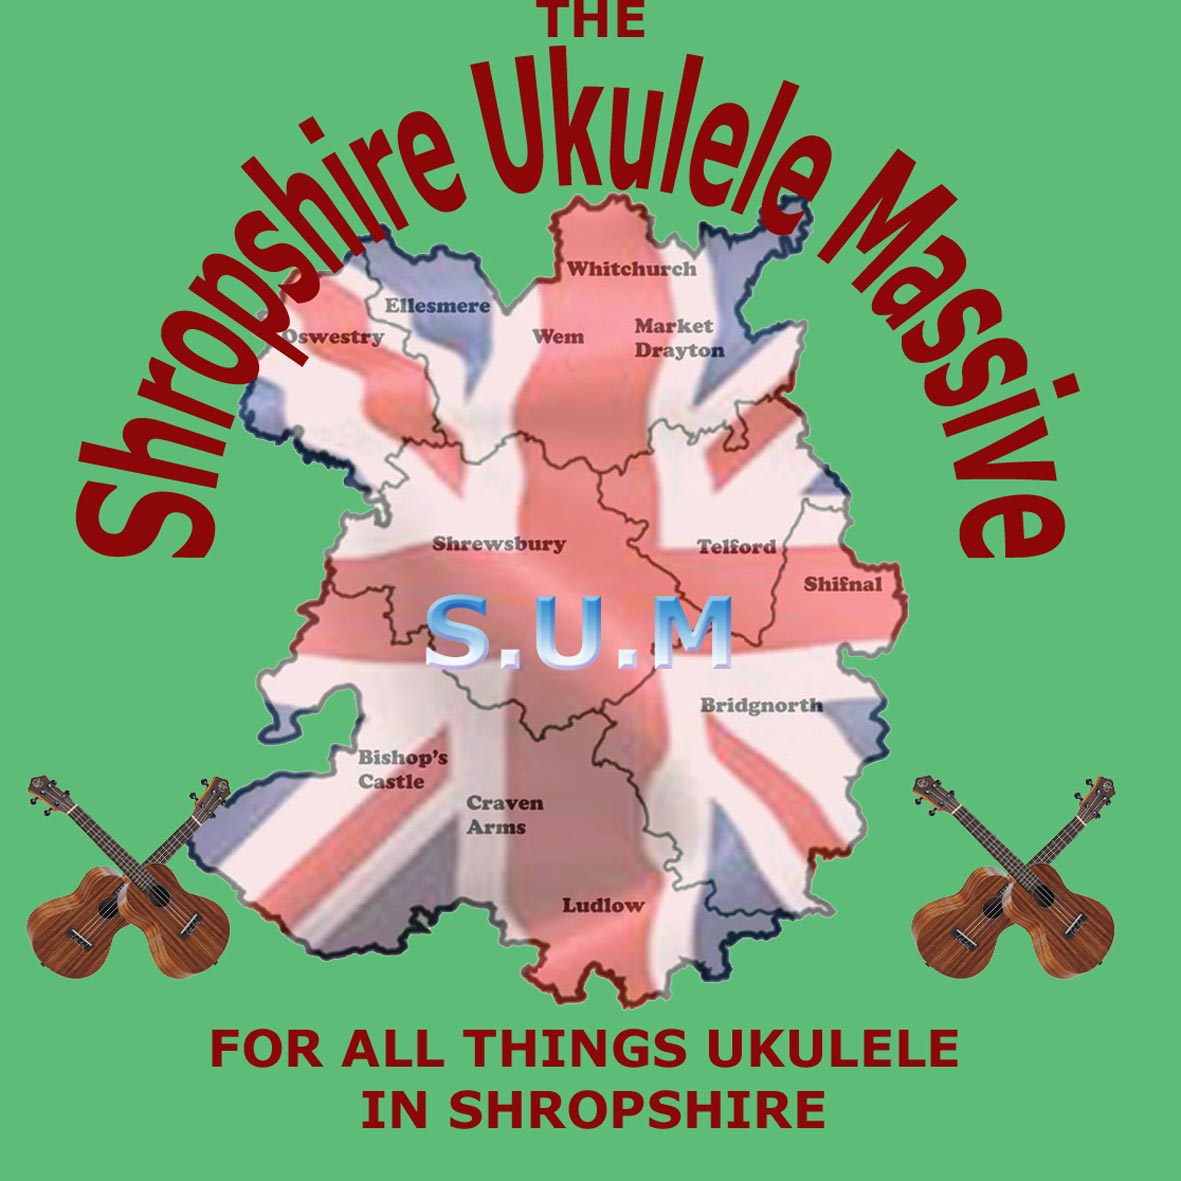 Please click here to go to The Shropshire Ukulele Massive website